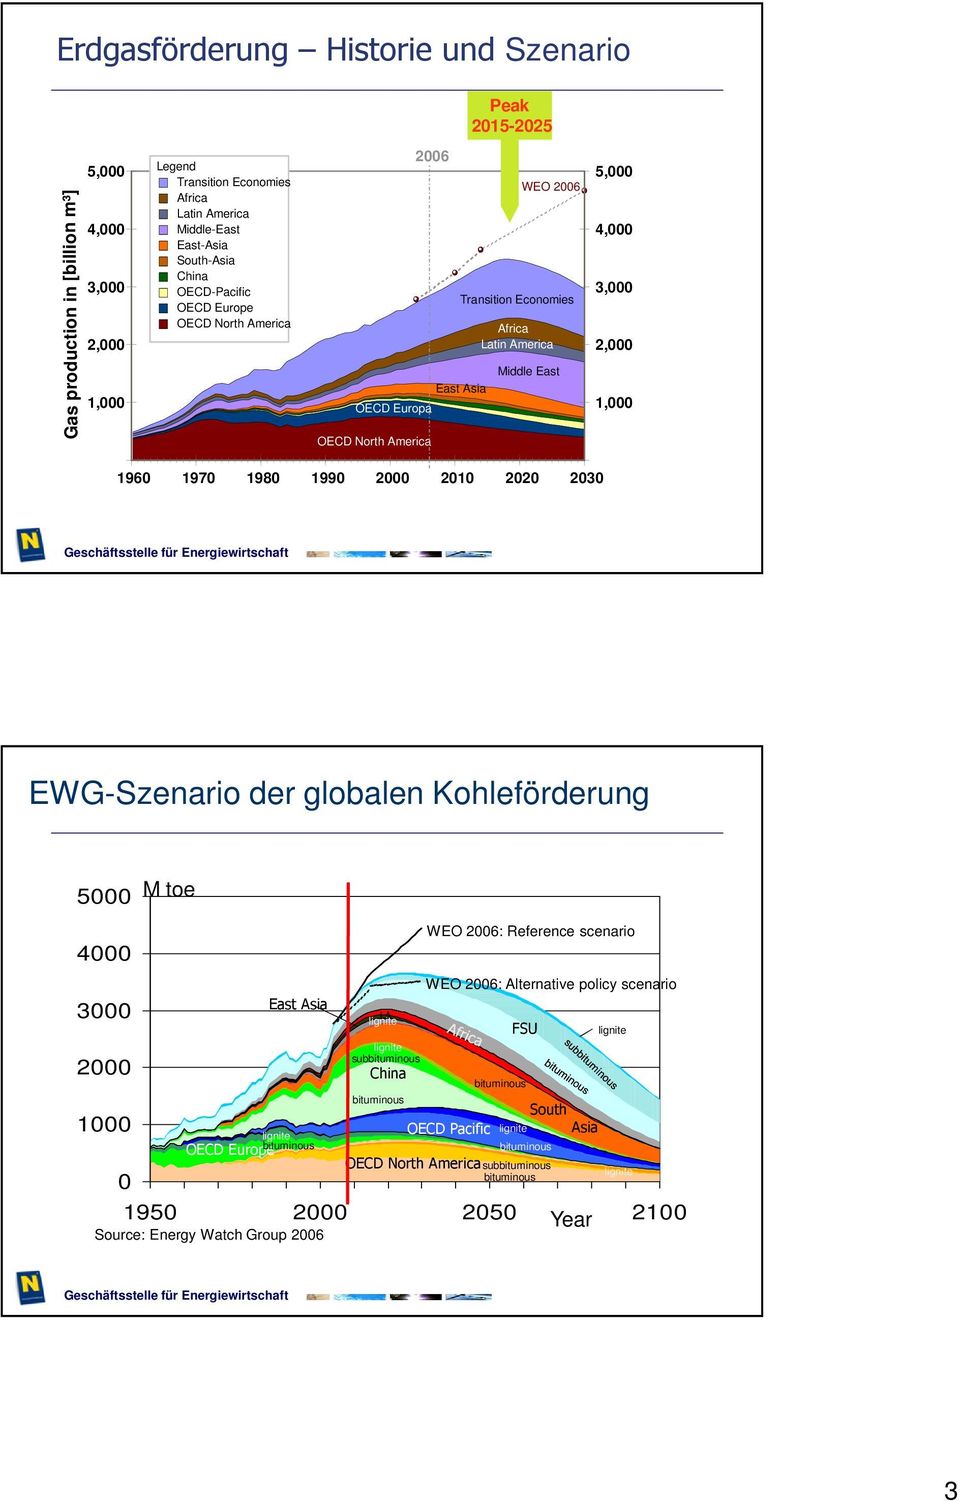 EWG-Szenario der globalen Kohleförderung 5 M toe 4 3 2 1 East Asia lignite OECD Europe bituminous lignite LA lignite subbituminous China bituminous OECD Pacific lignite bituminous OECD